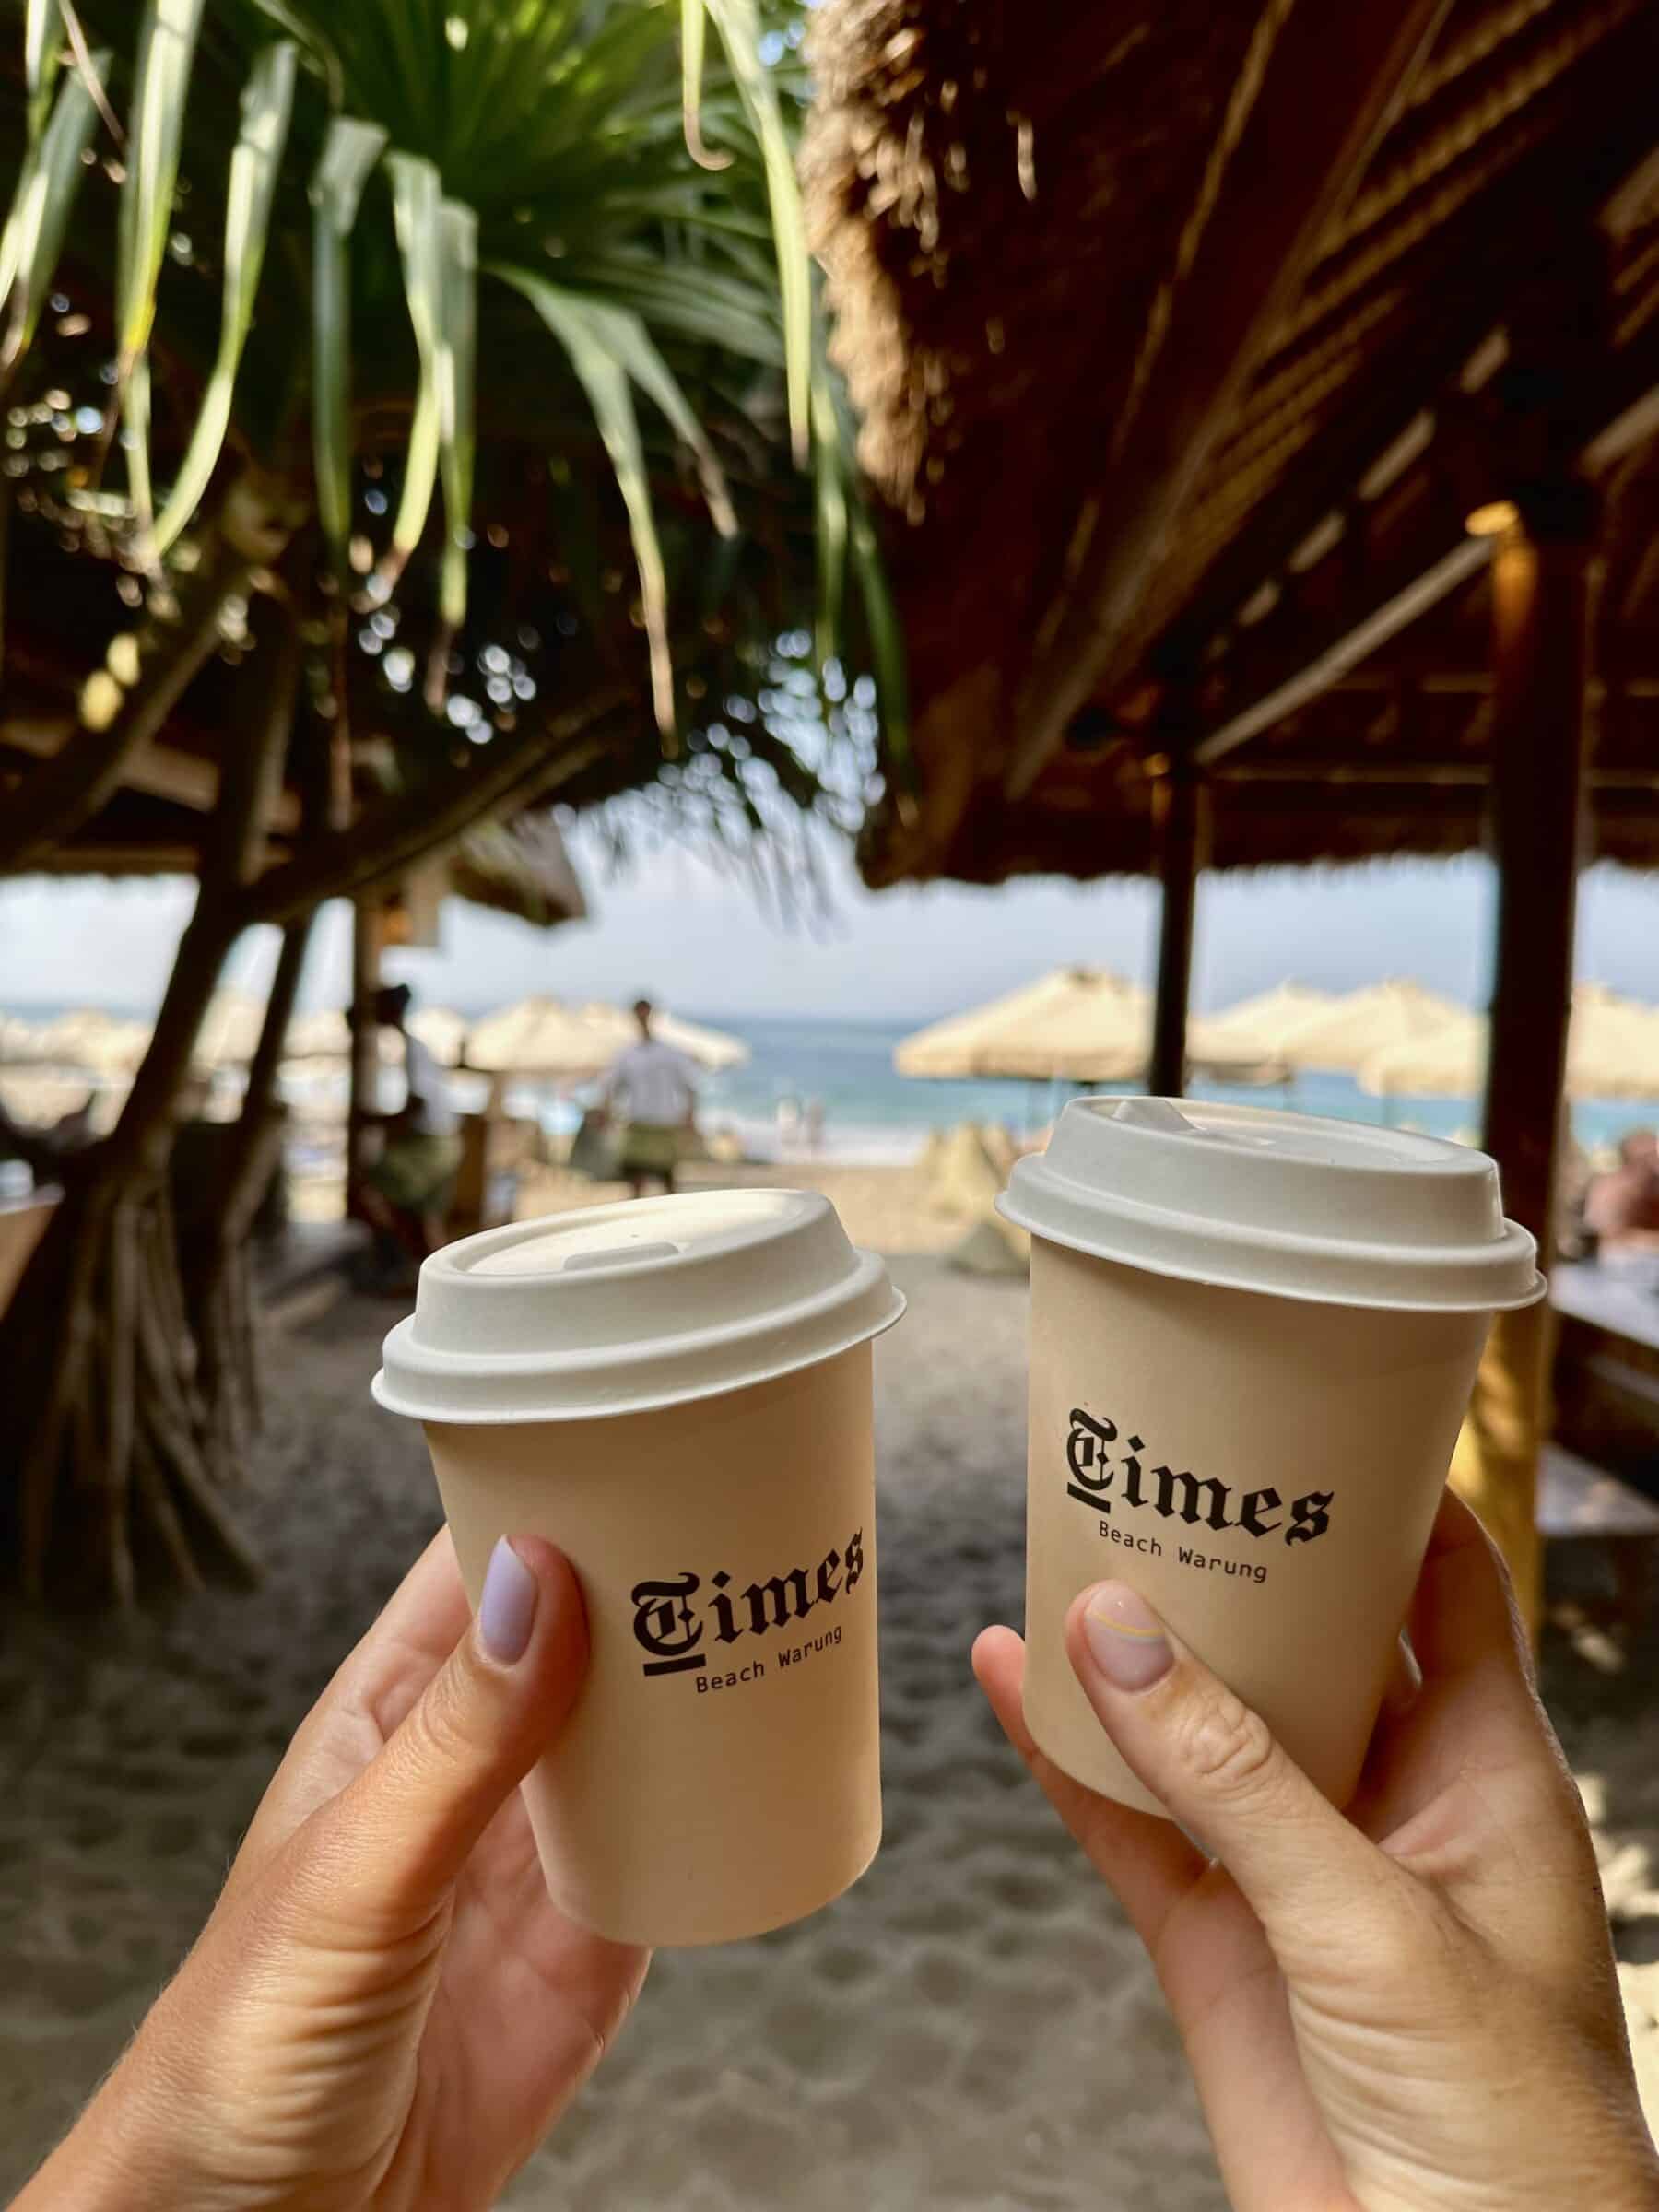 Times beach warung koffie batu bolong canggu bali